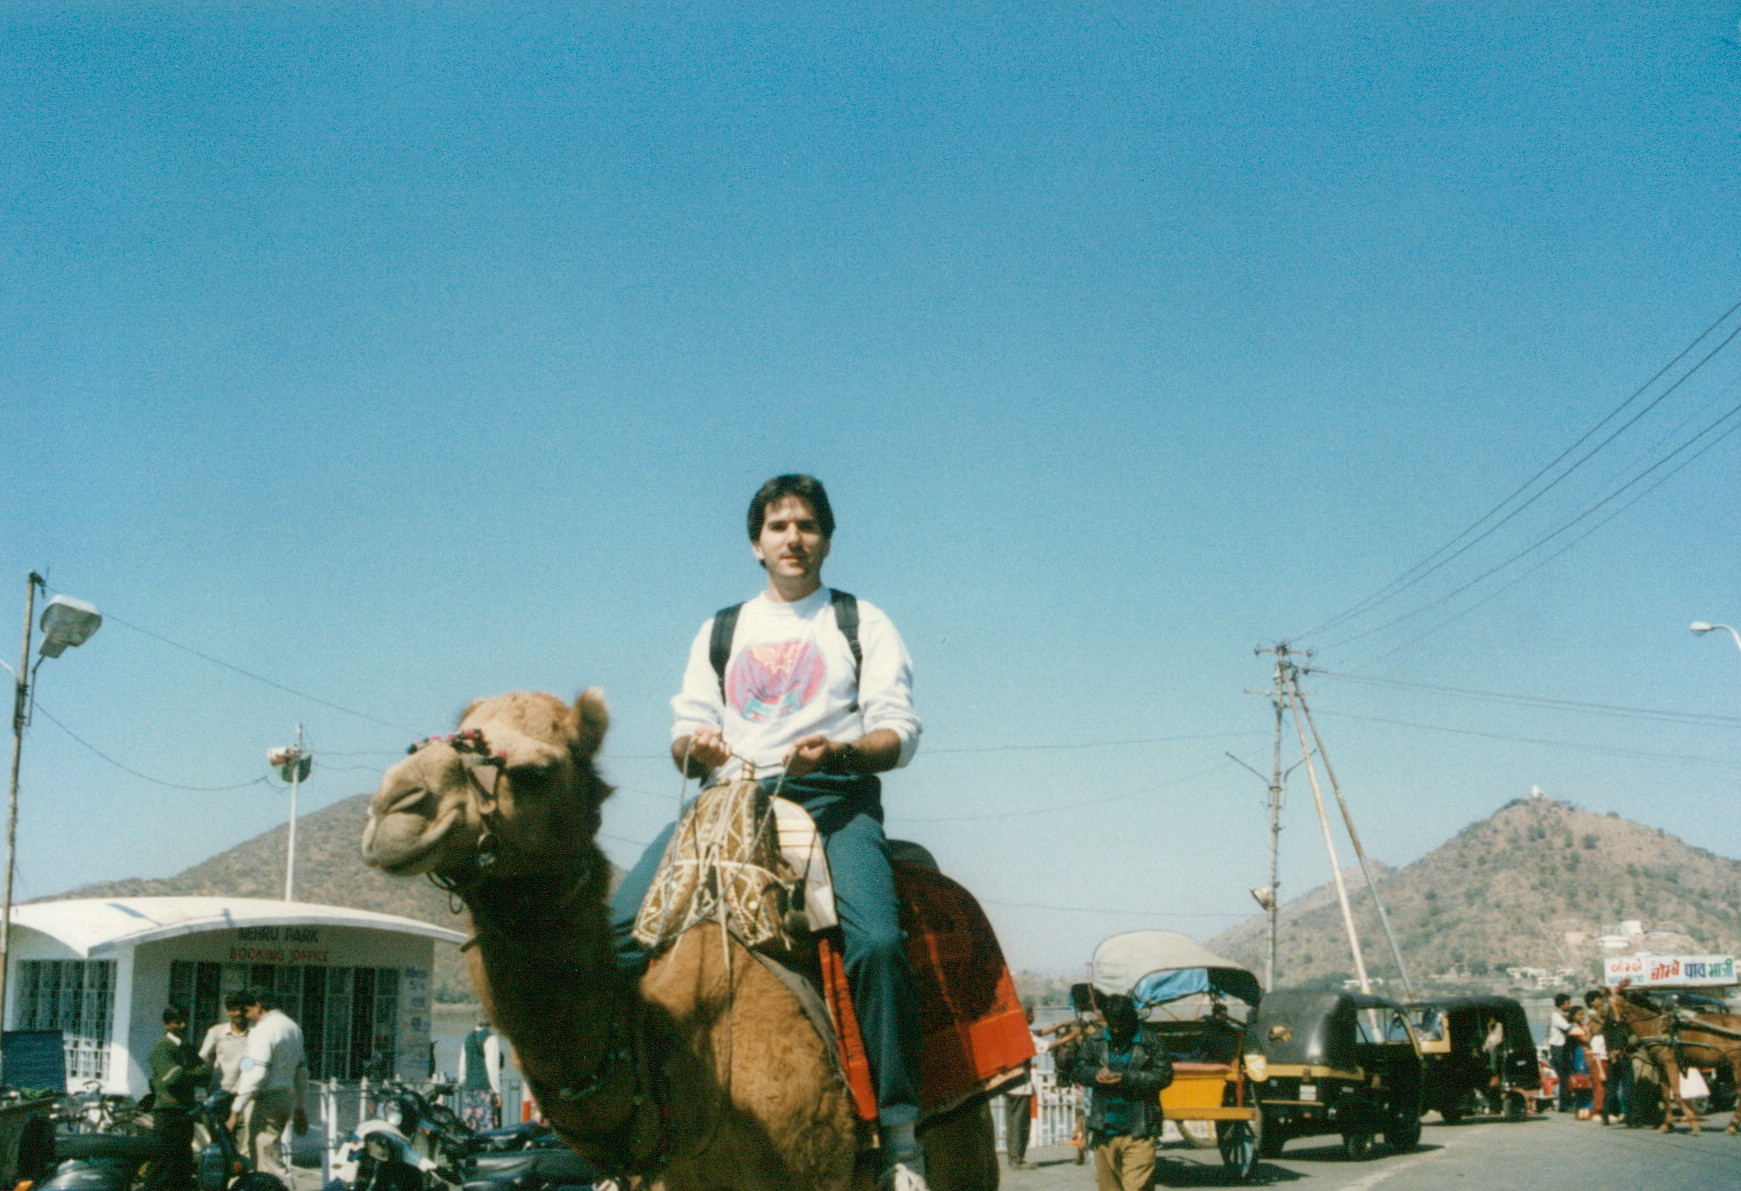 Ron_Riding_on_Camel_India_1997.jpg